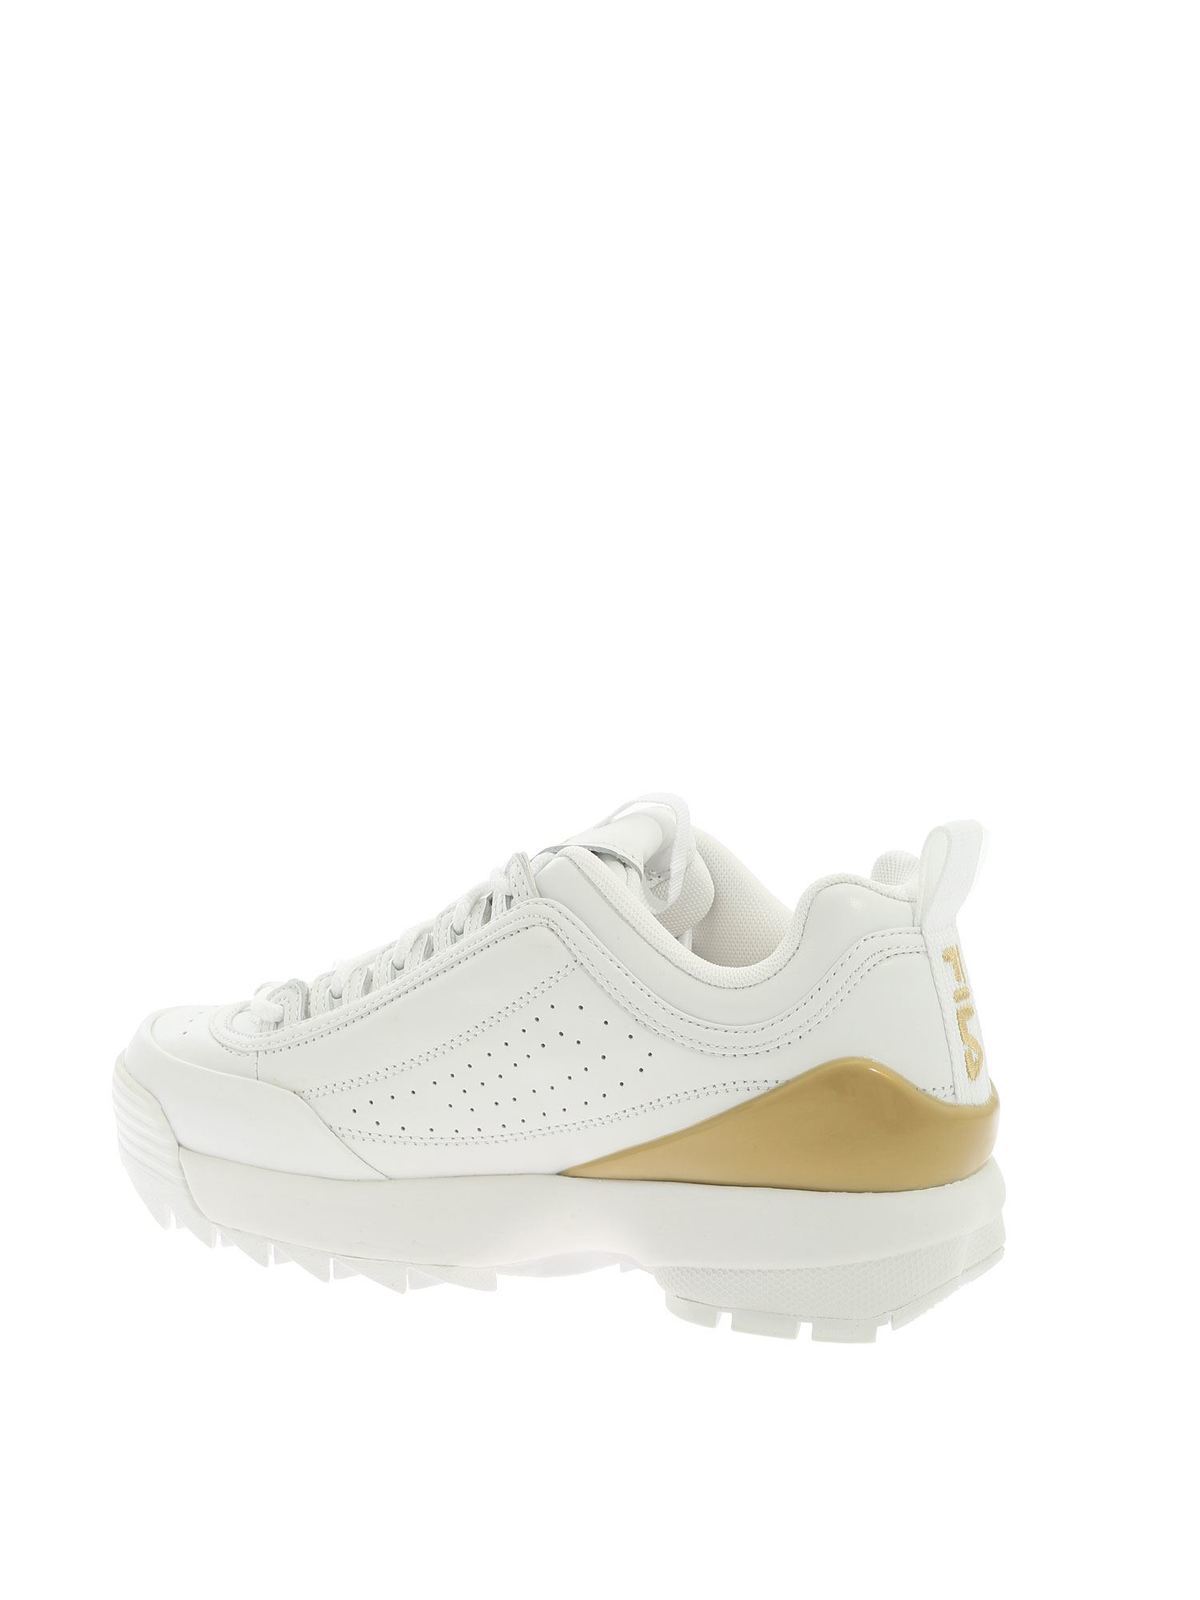 wapenkamer Elektropositief Zaailing Trainers Fila - Disruptor Premium sneakers in white and gold - 10108621FG